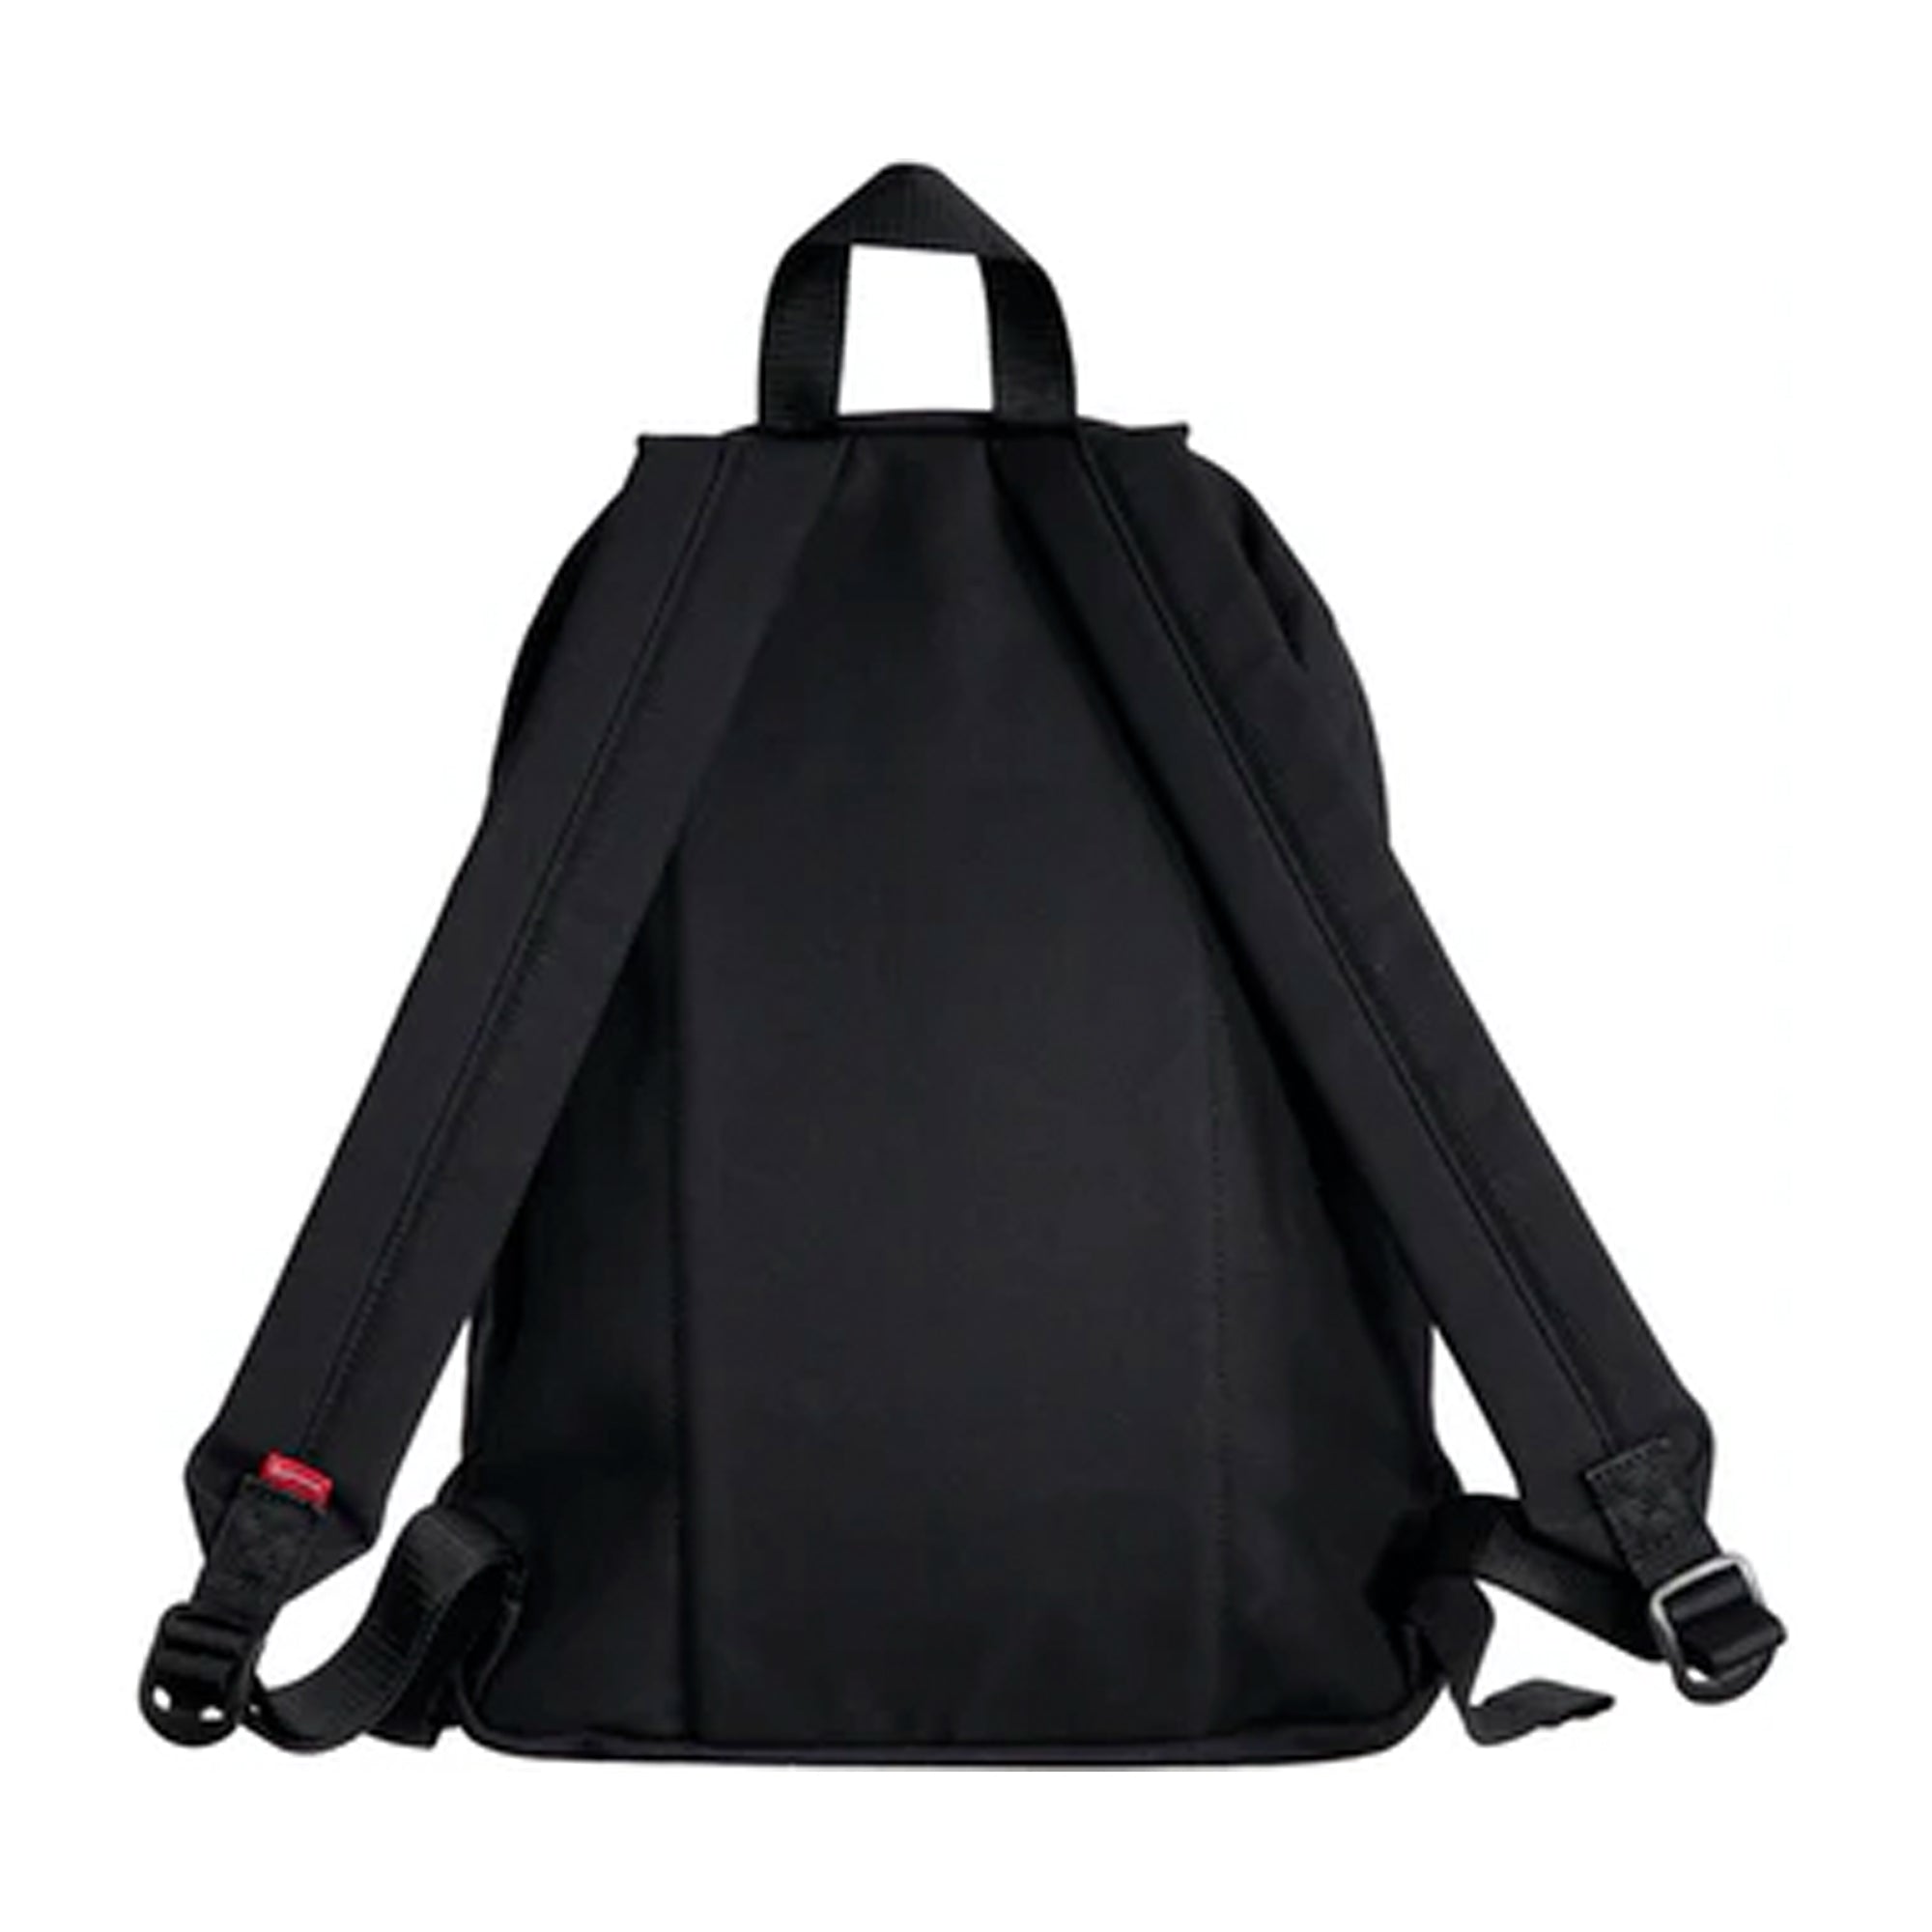 Supreme Canvas Backpack (FW20) Black-PLUS